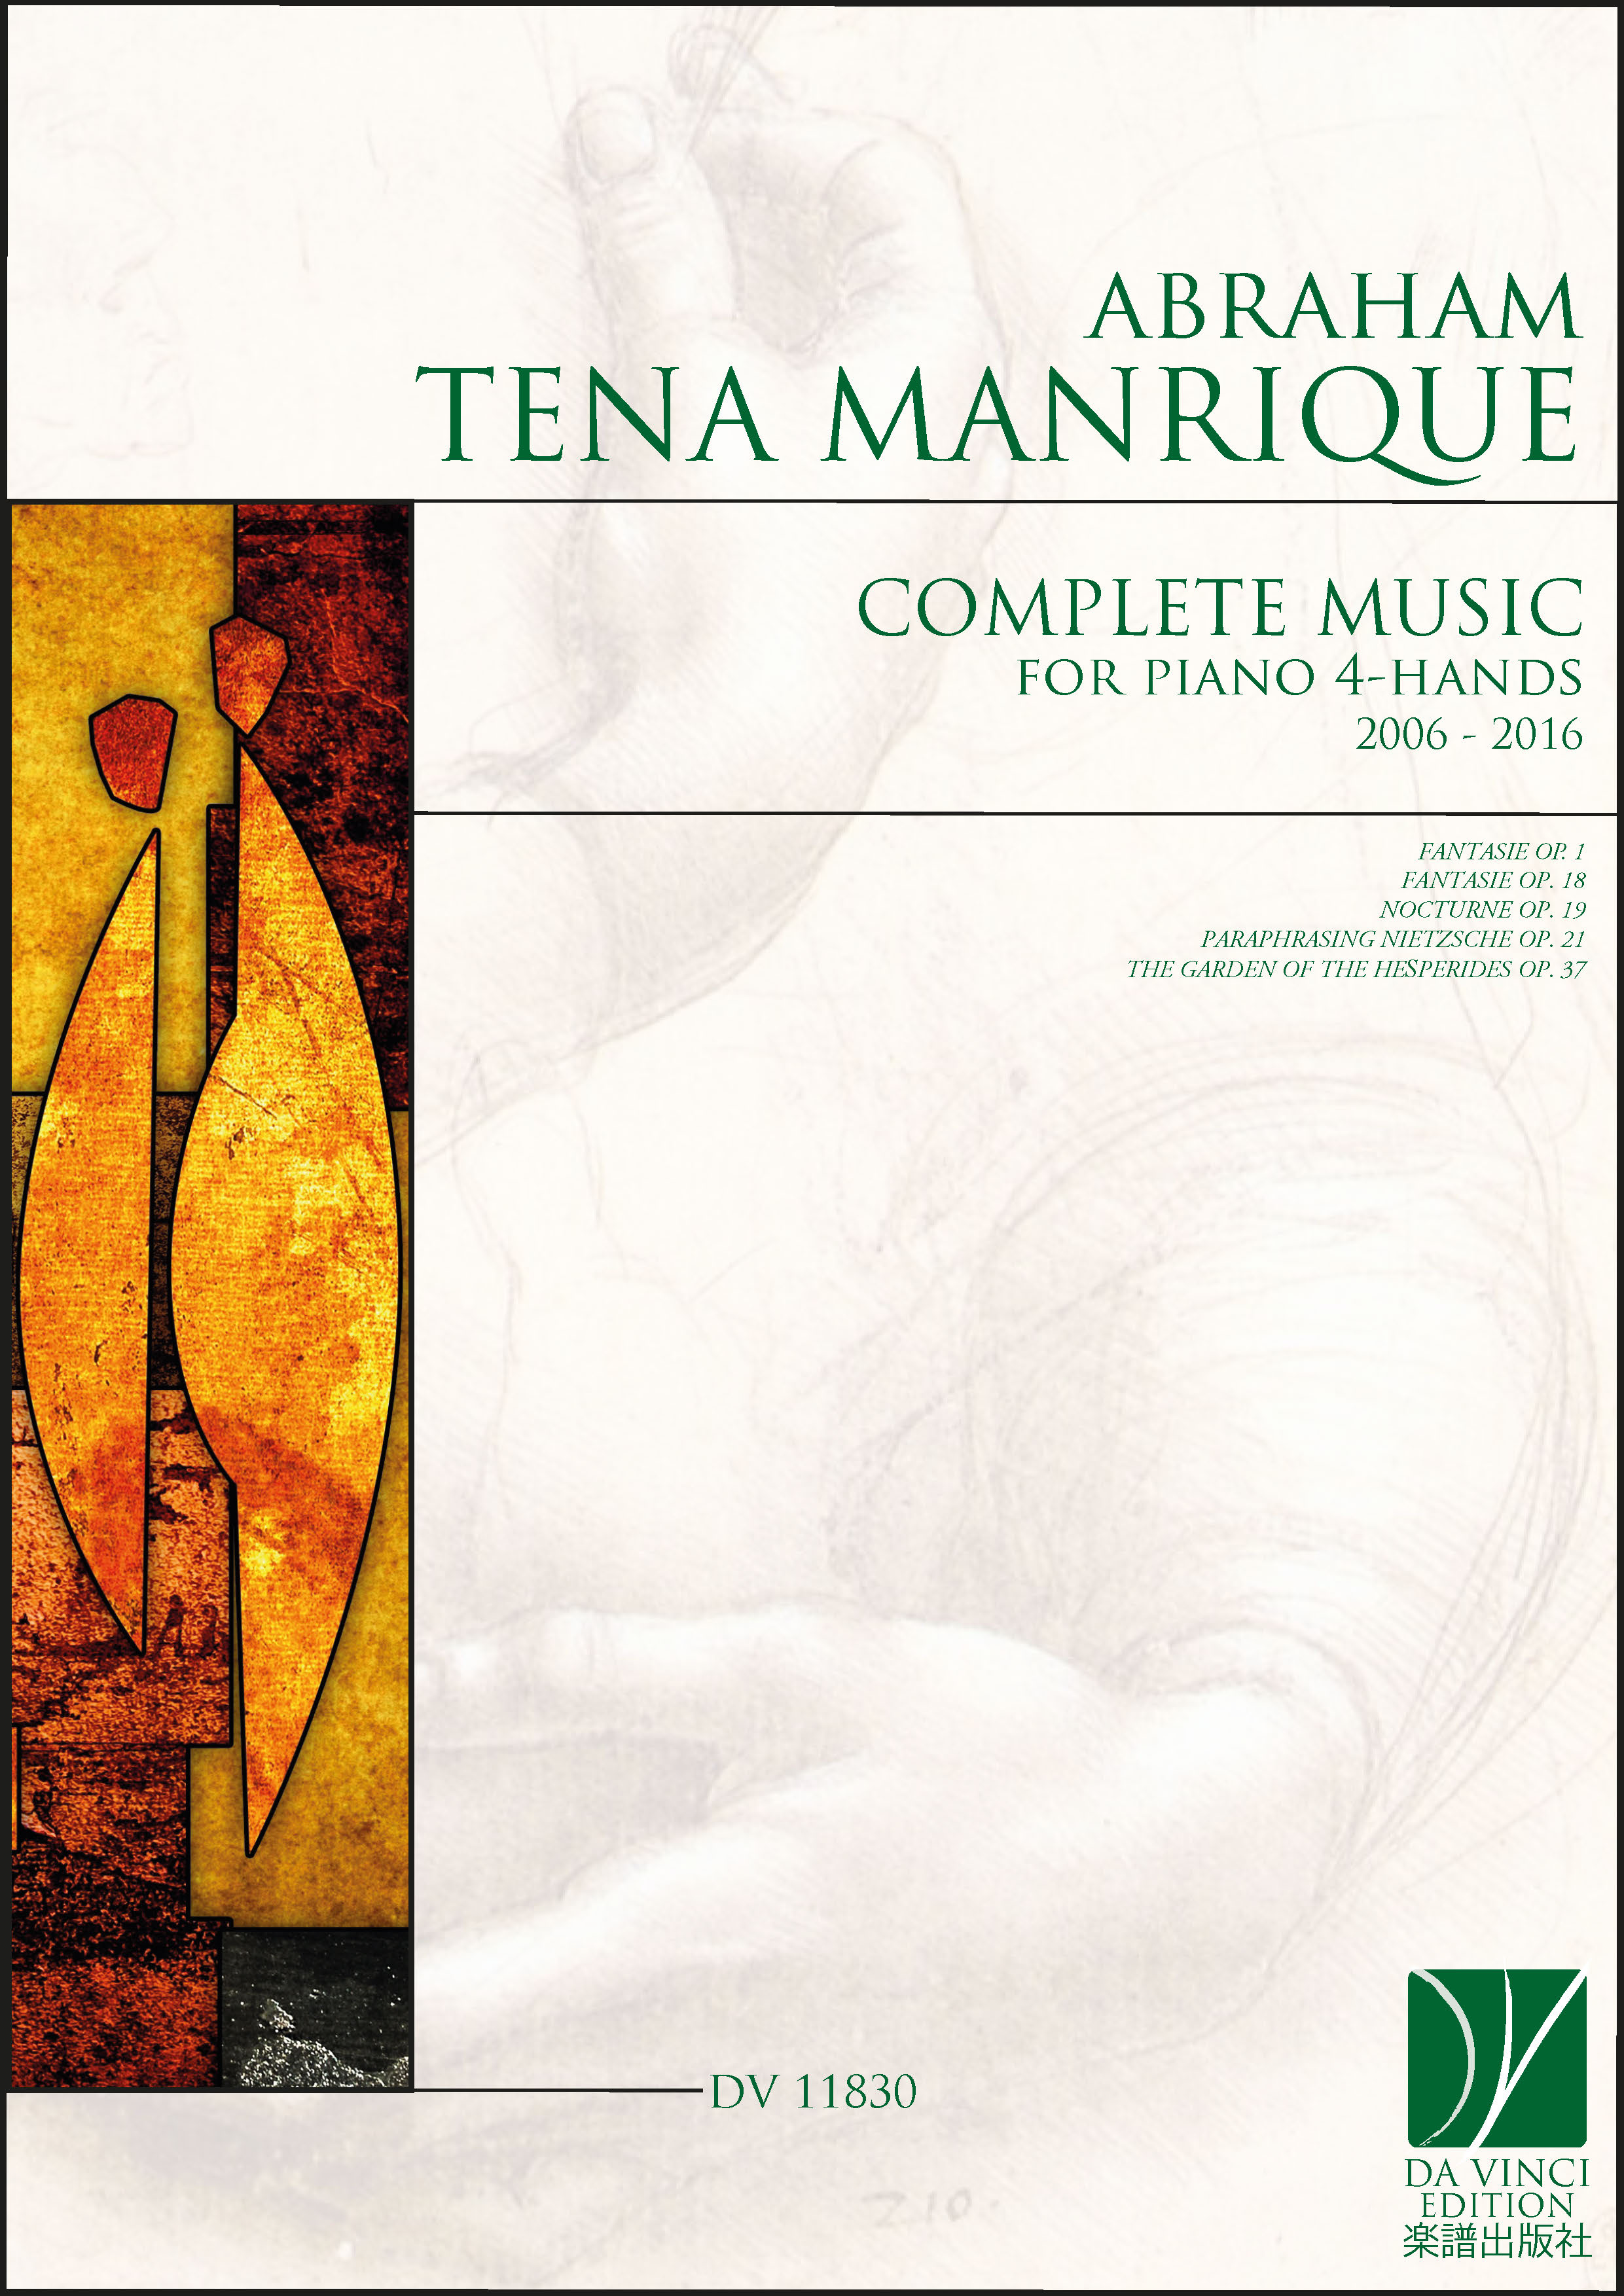 Music for Piano 4-Hands (TENA MANRIQUE ABRAHAM)